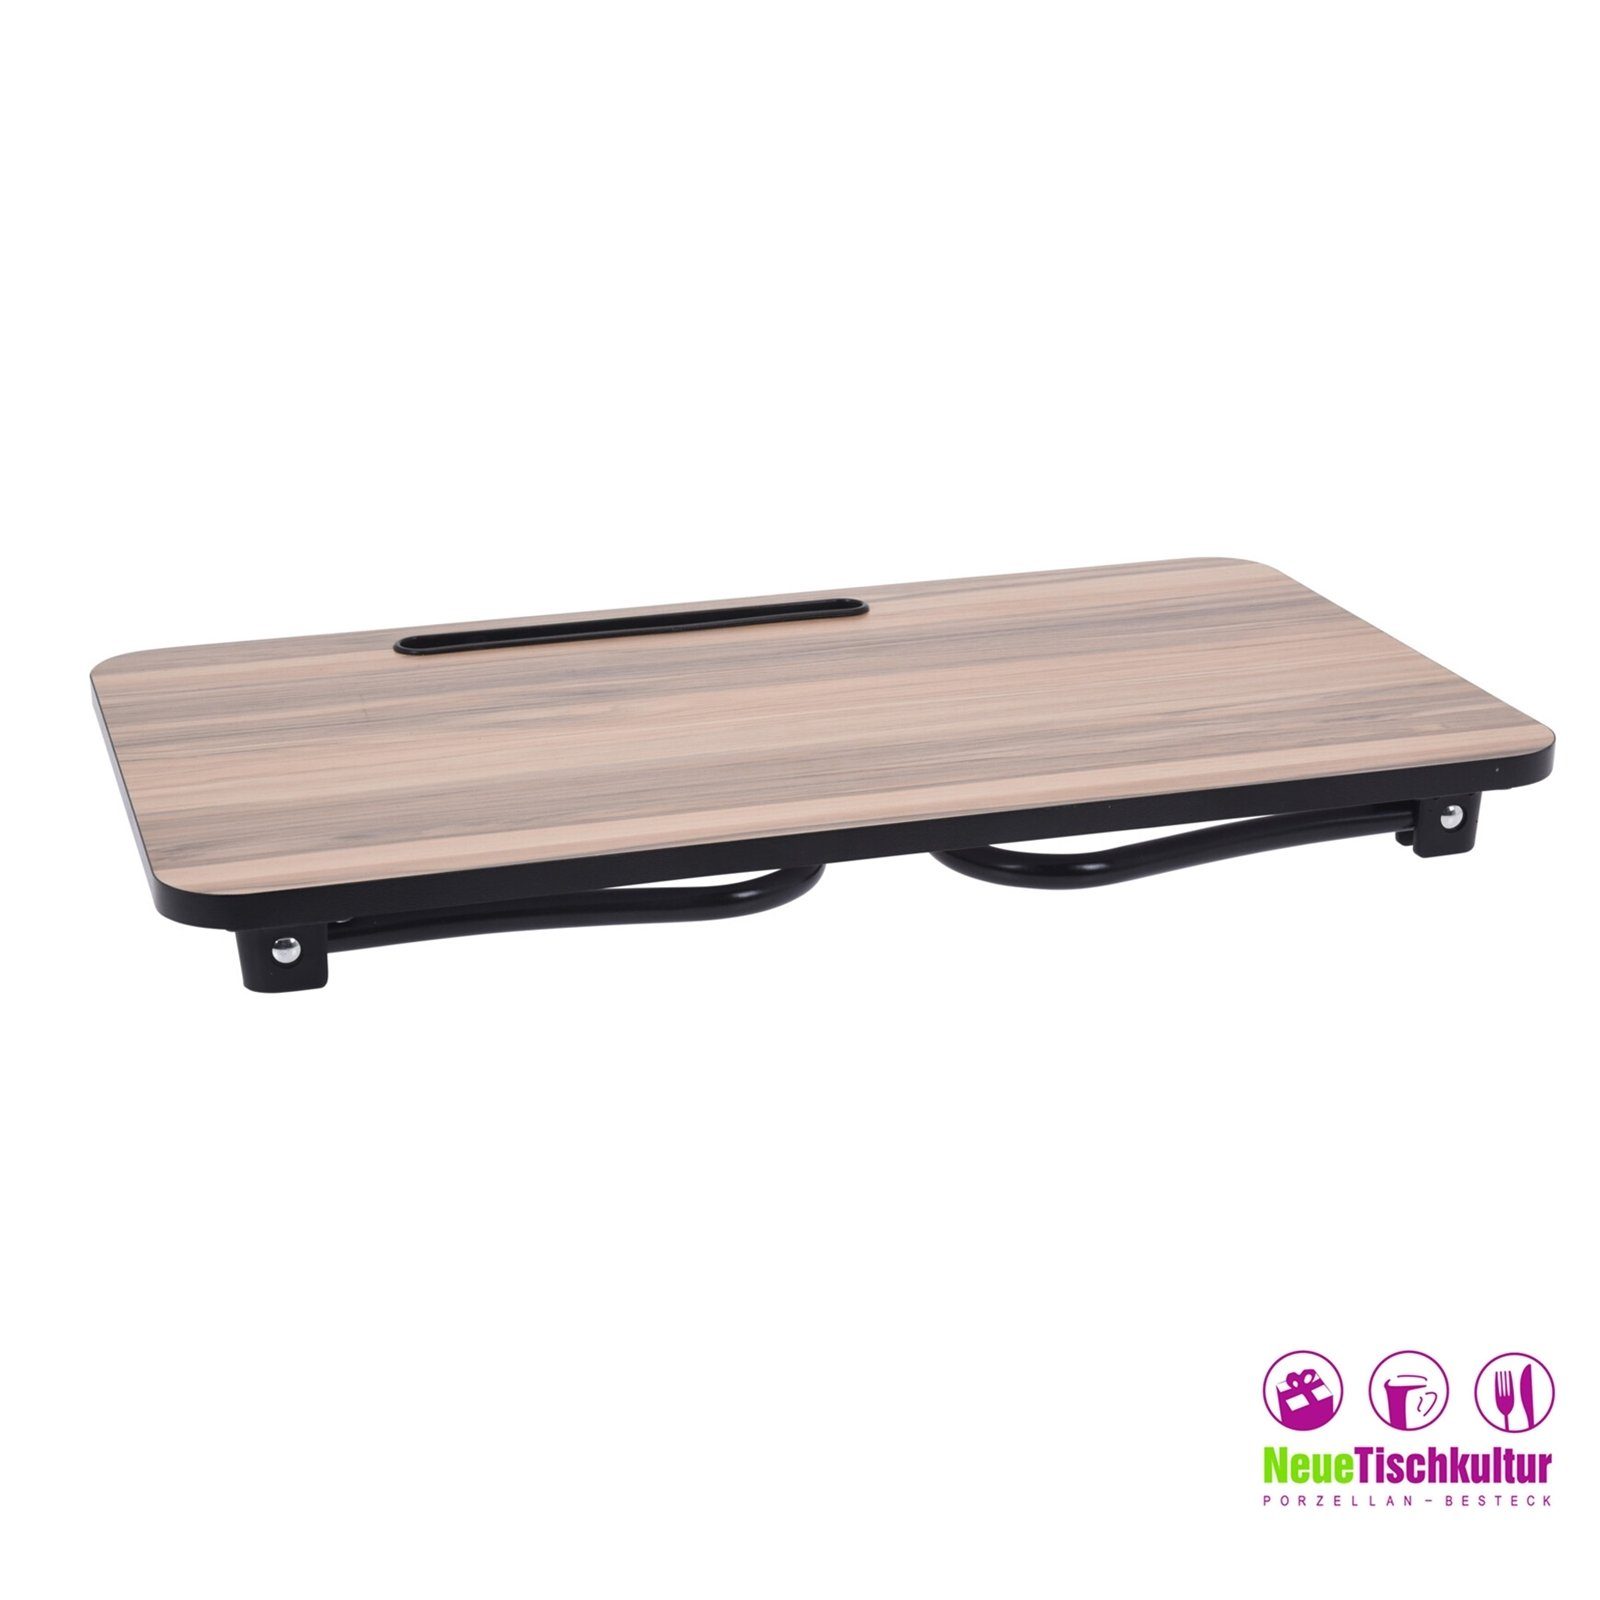 Neuetischkultur Tablett Bett-Serviertisch, klappbare Beine (Stück, Holz/Metall, 1-tlg) Holz, Metall